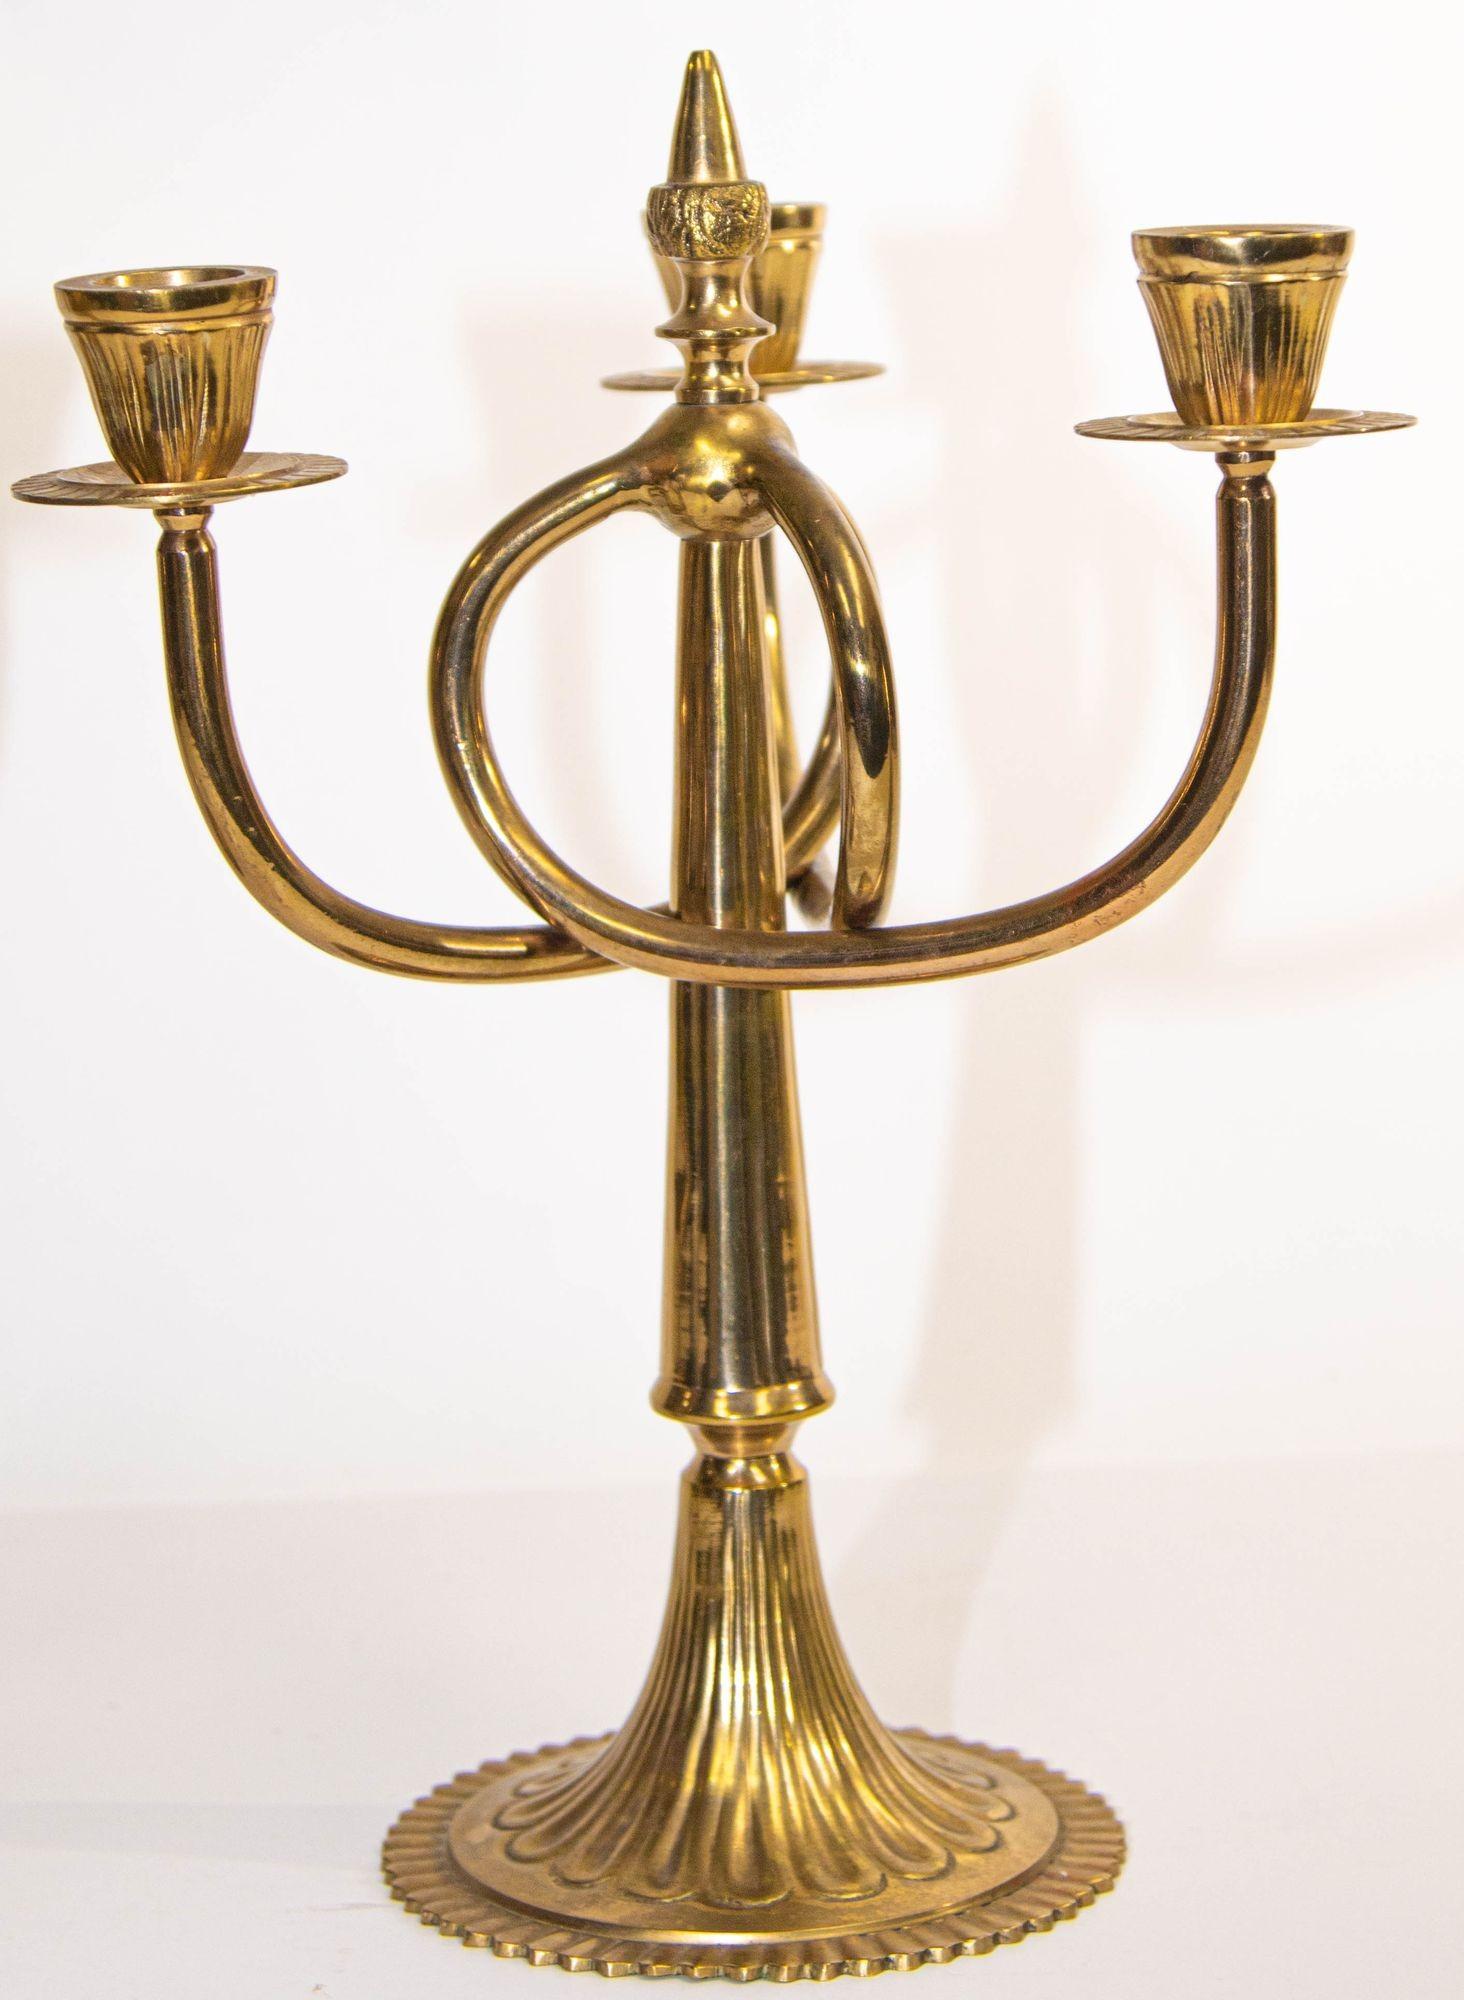 Cast Vintage Pair of Brass Art Nouveau Candelabras with 3 Branches, c.1950